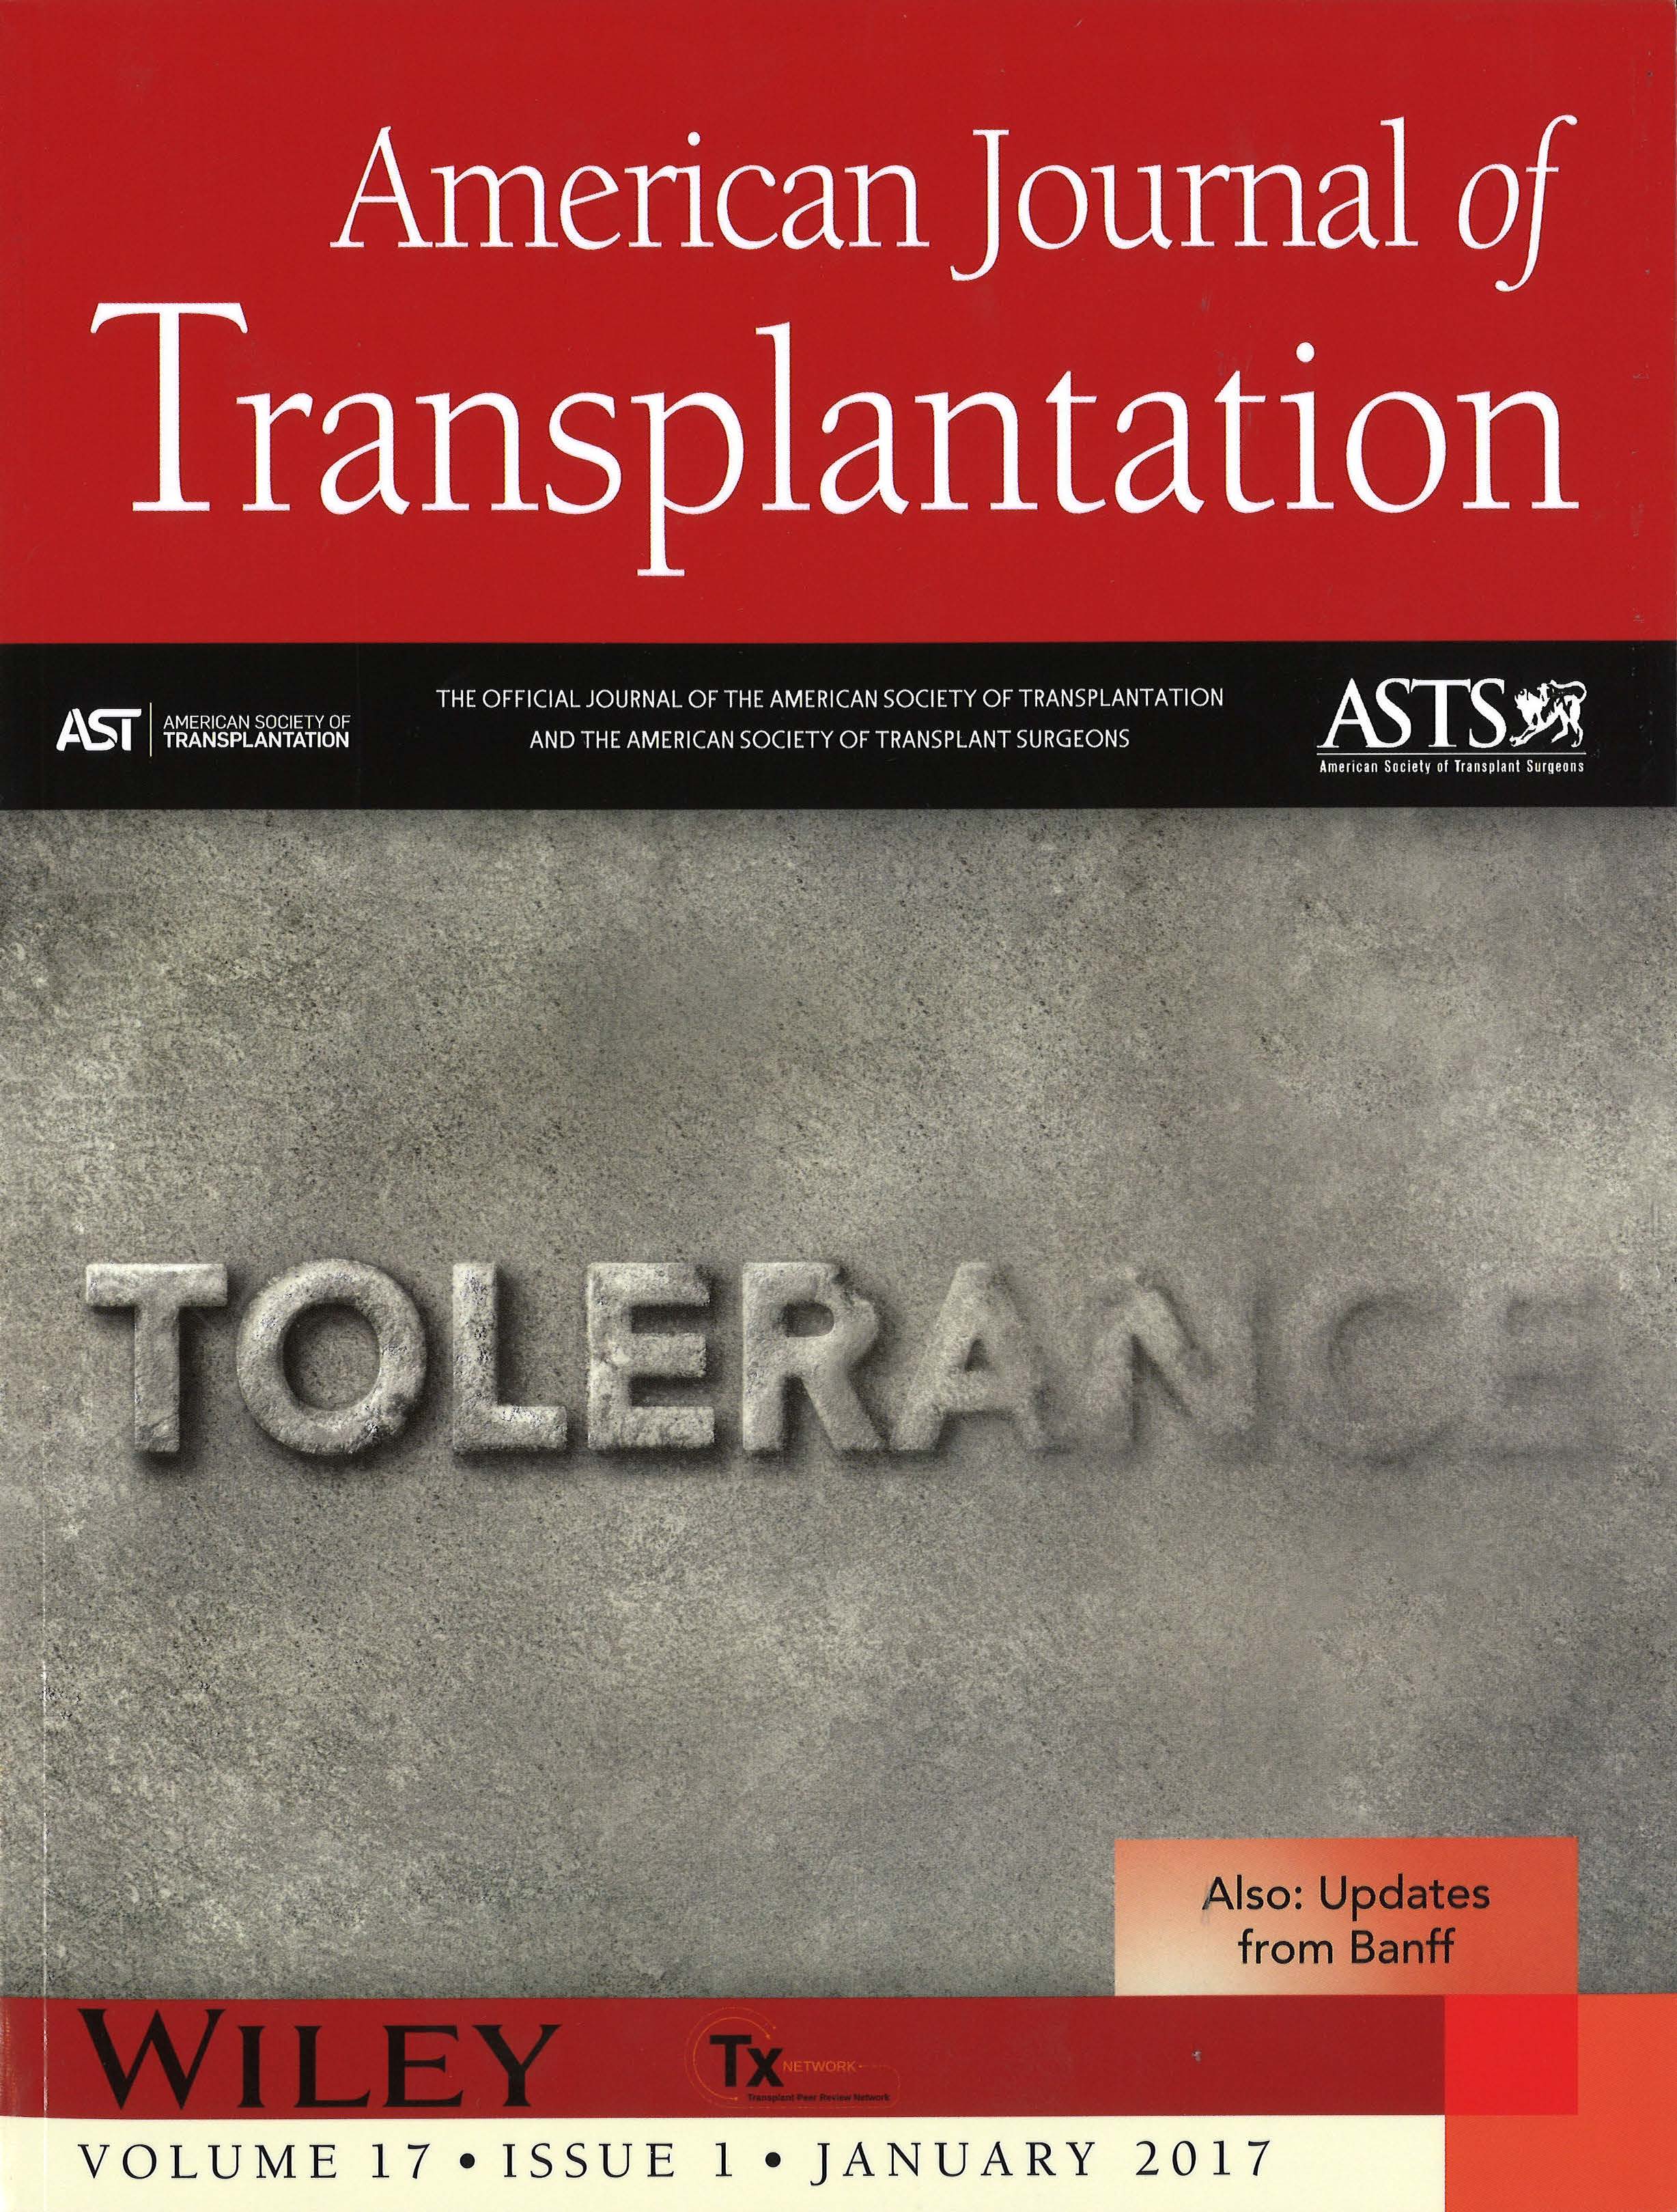 American Journal of Transplantation